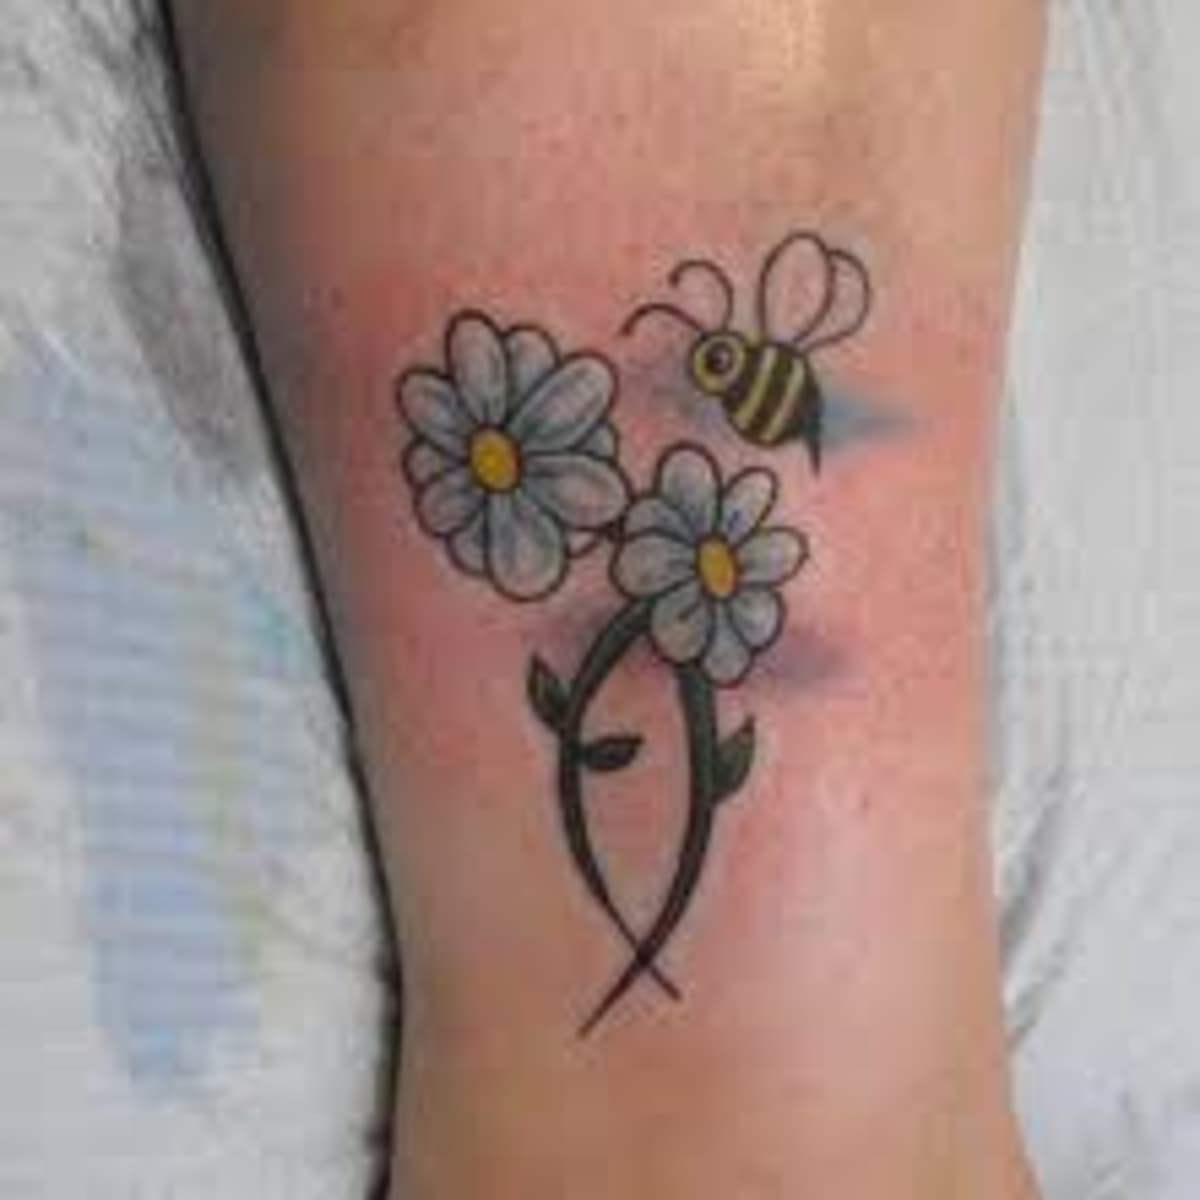 Daisy Tattoo Designs And Daisy Tattoo Meanings-Daisy Tattoo Ideas And Tattoo  Pictures - HubPages